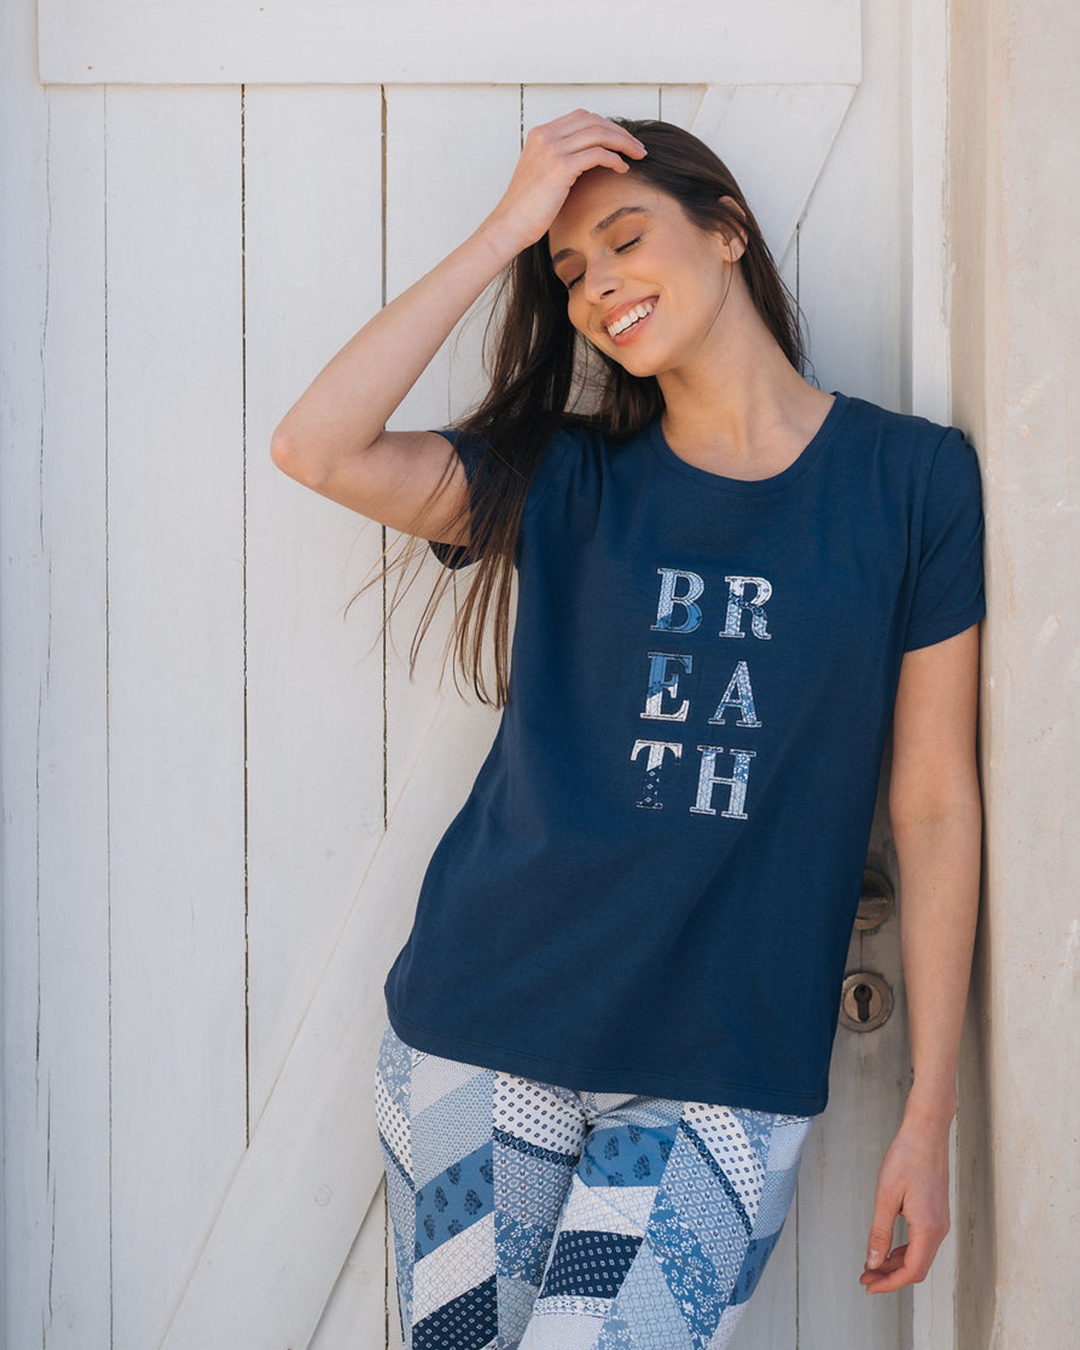 Breath pajamas for women